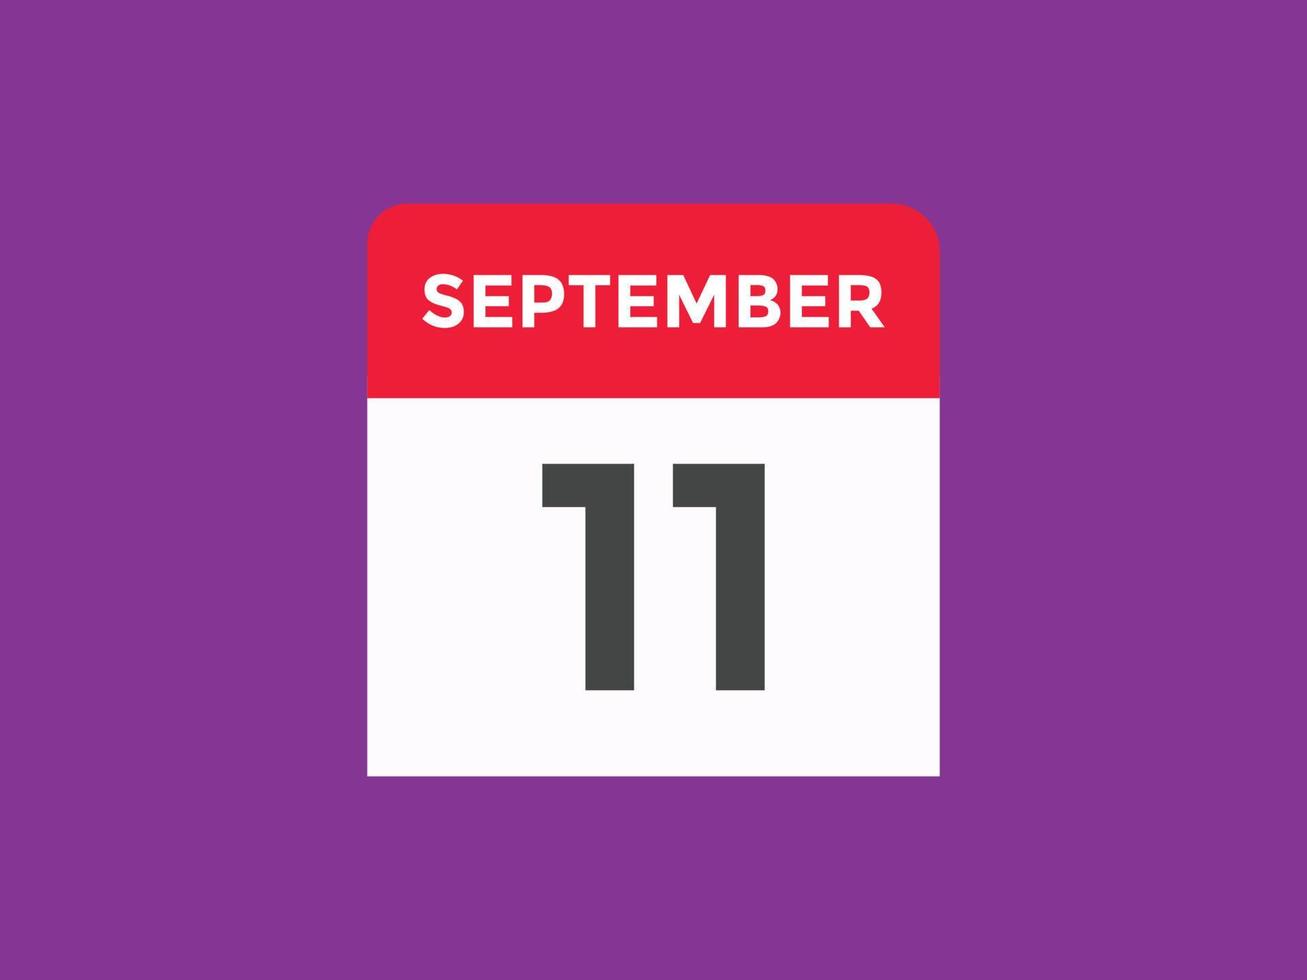 september 11 calendar reminder. 11th september daily calendar icon template. Calendar 11th september icon Design template. Vector illustration